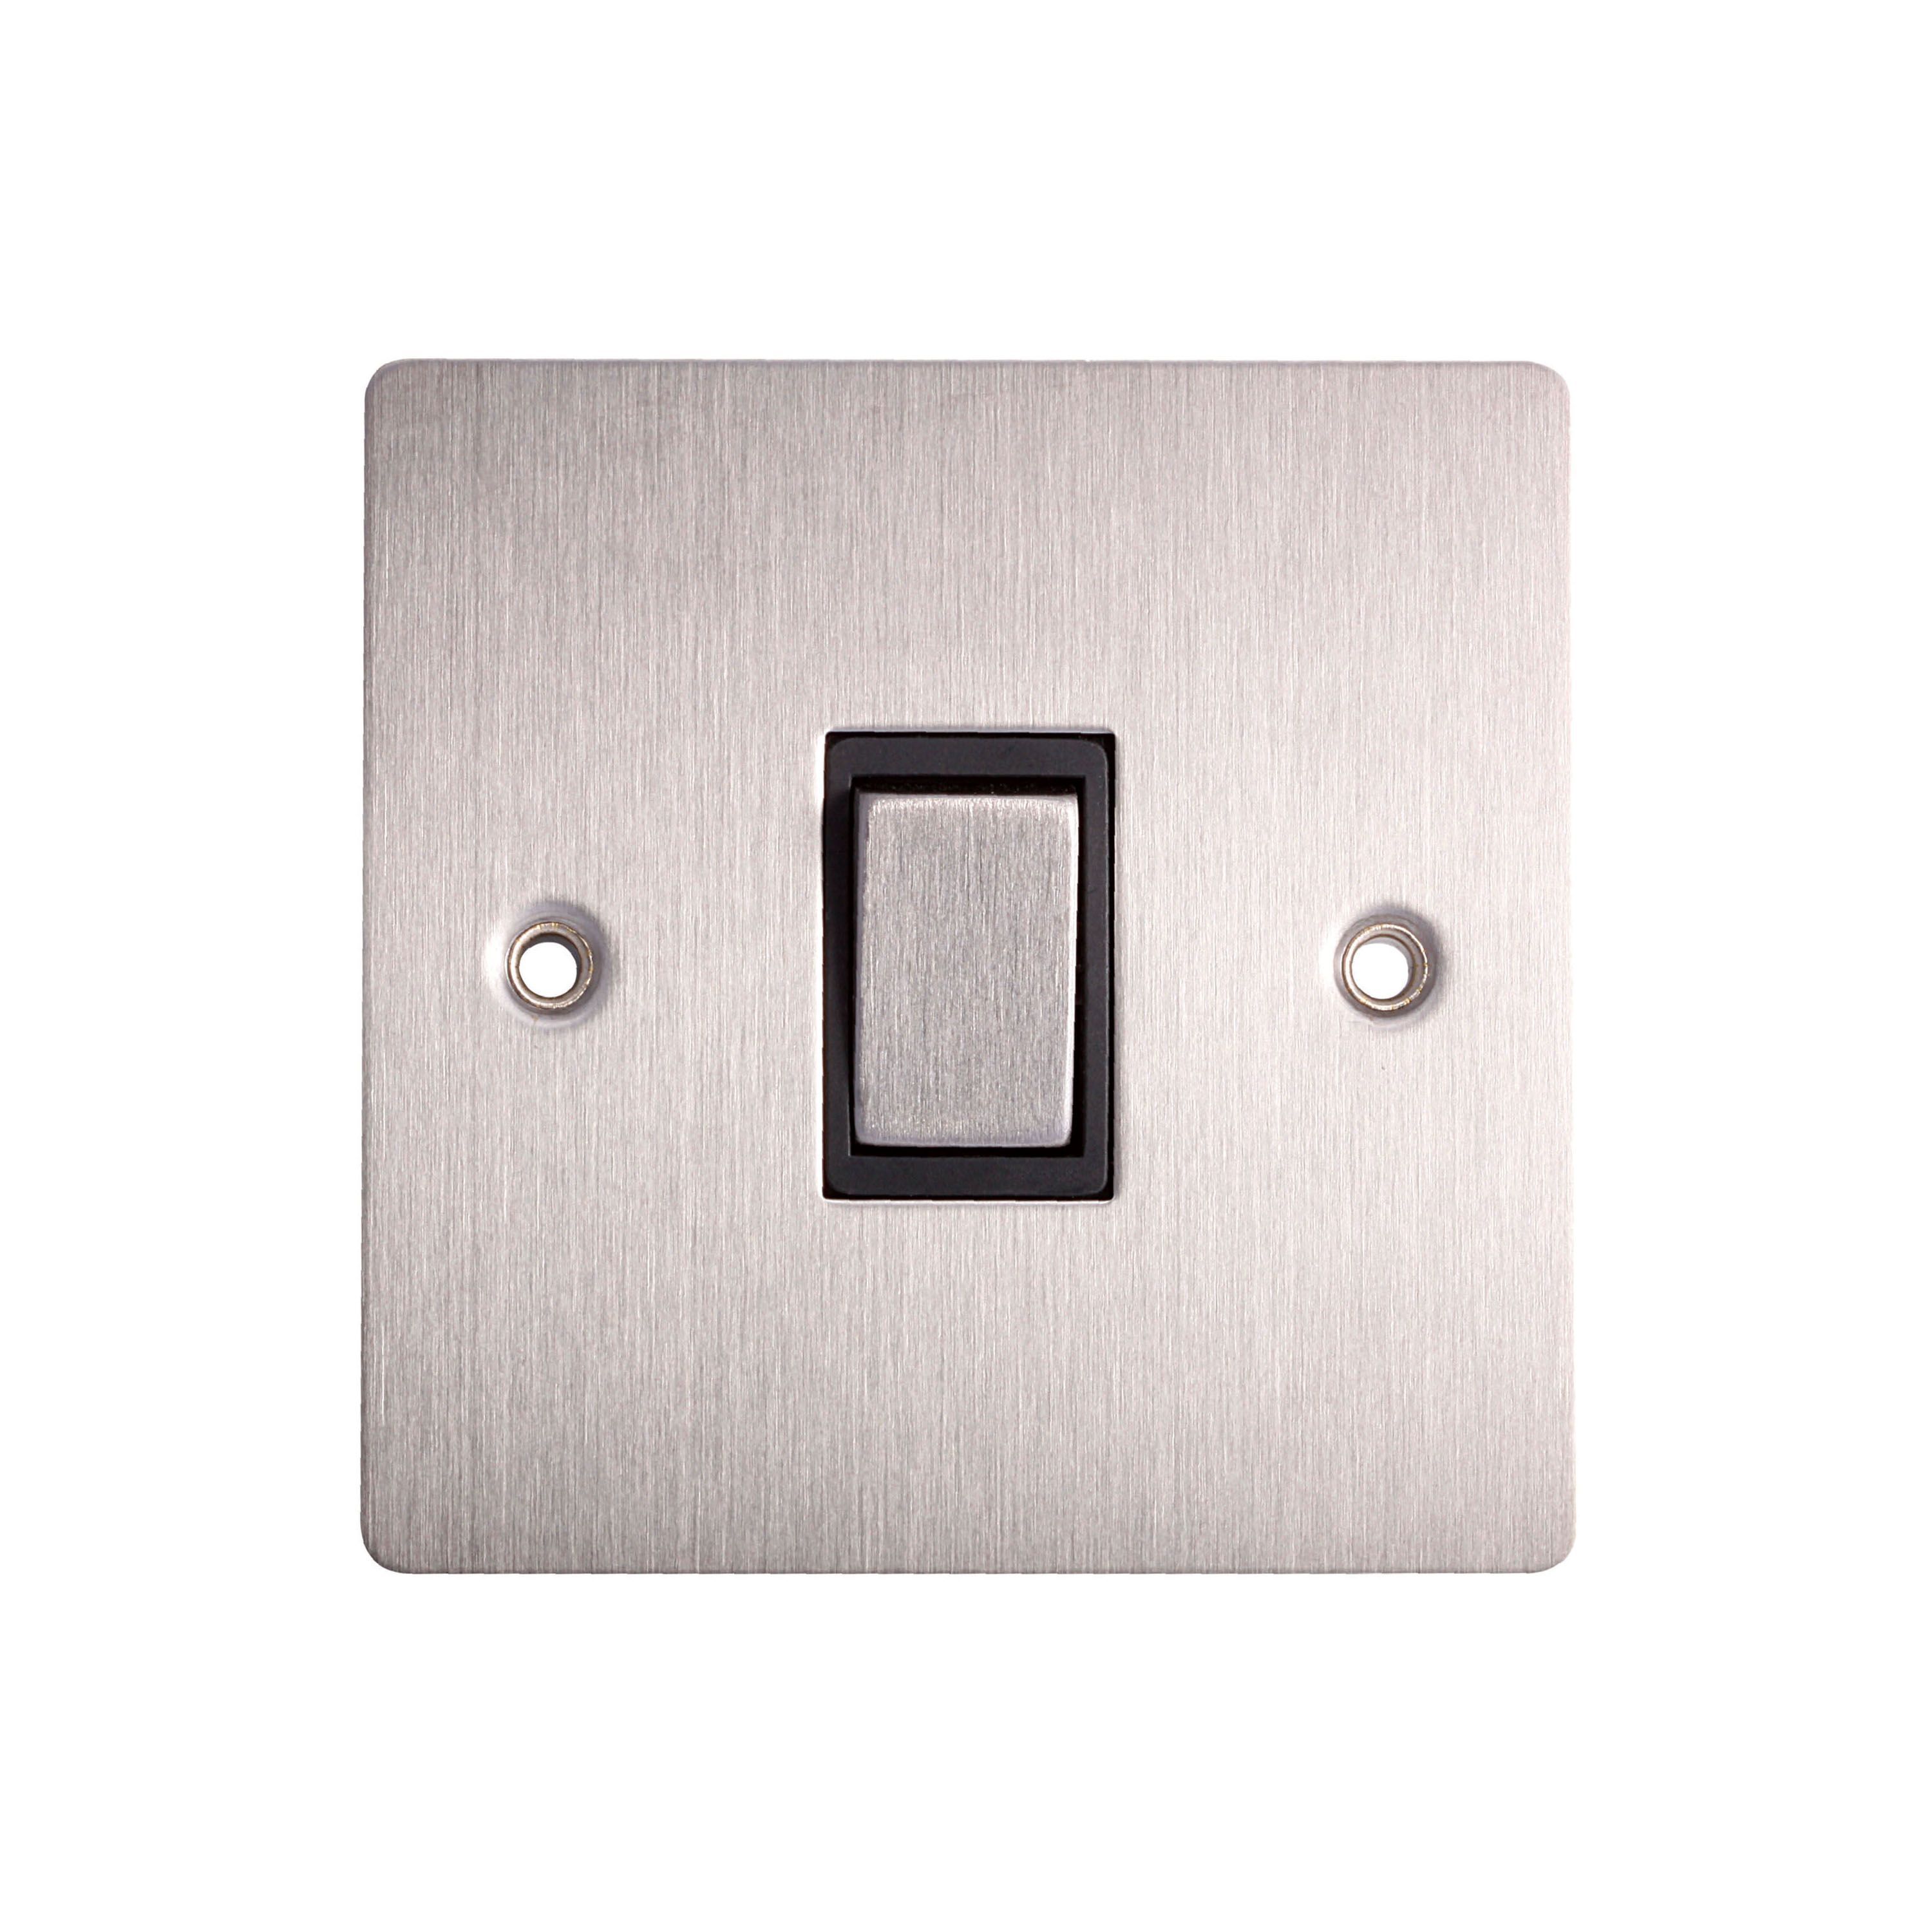 Holder 10A Single Screwed Intermediate switch Stainless steel effect